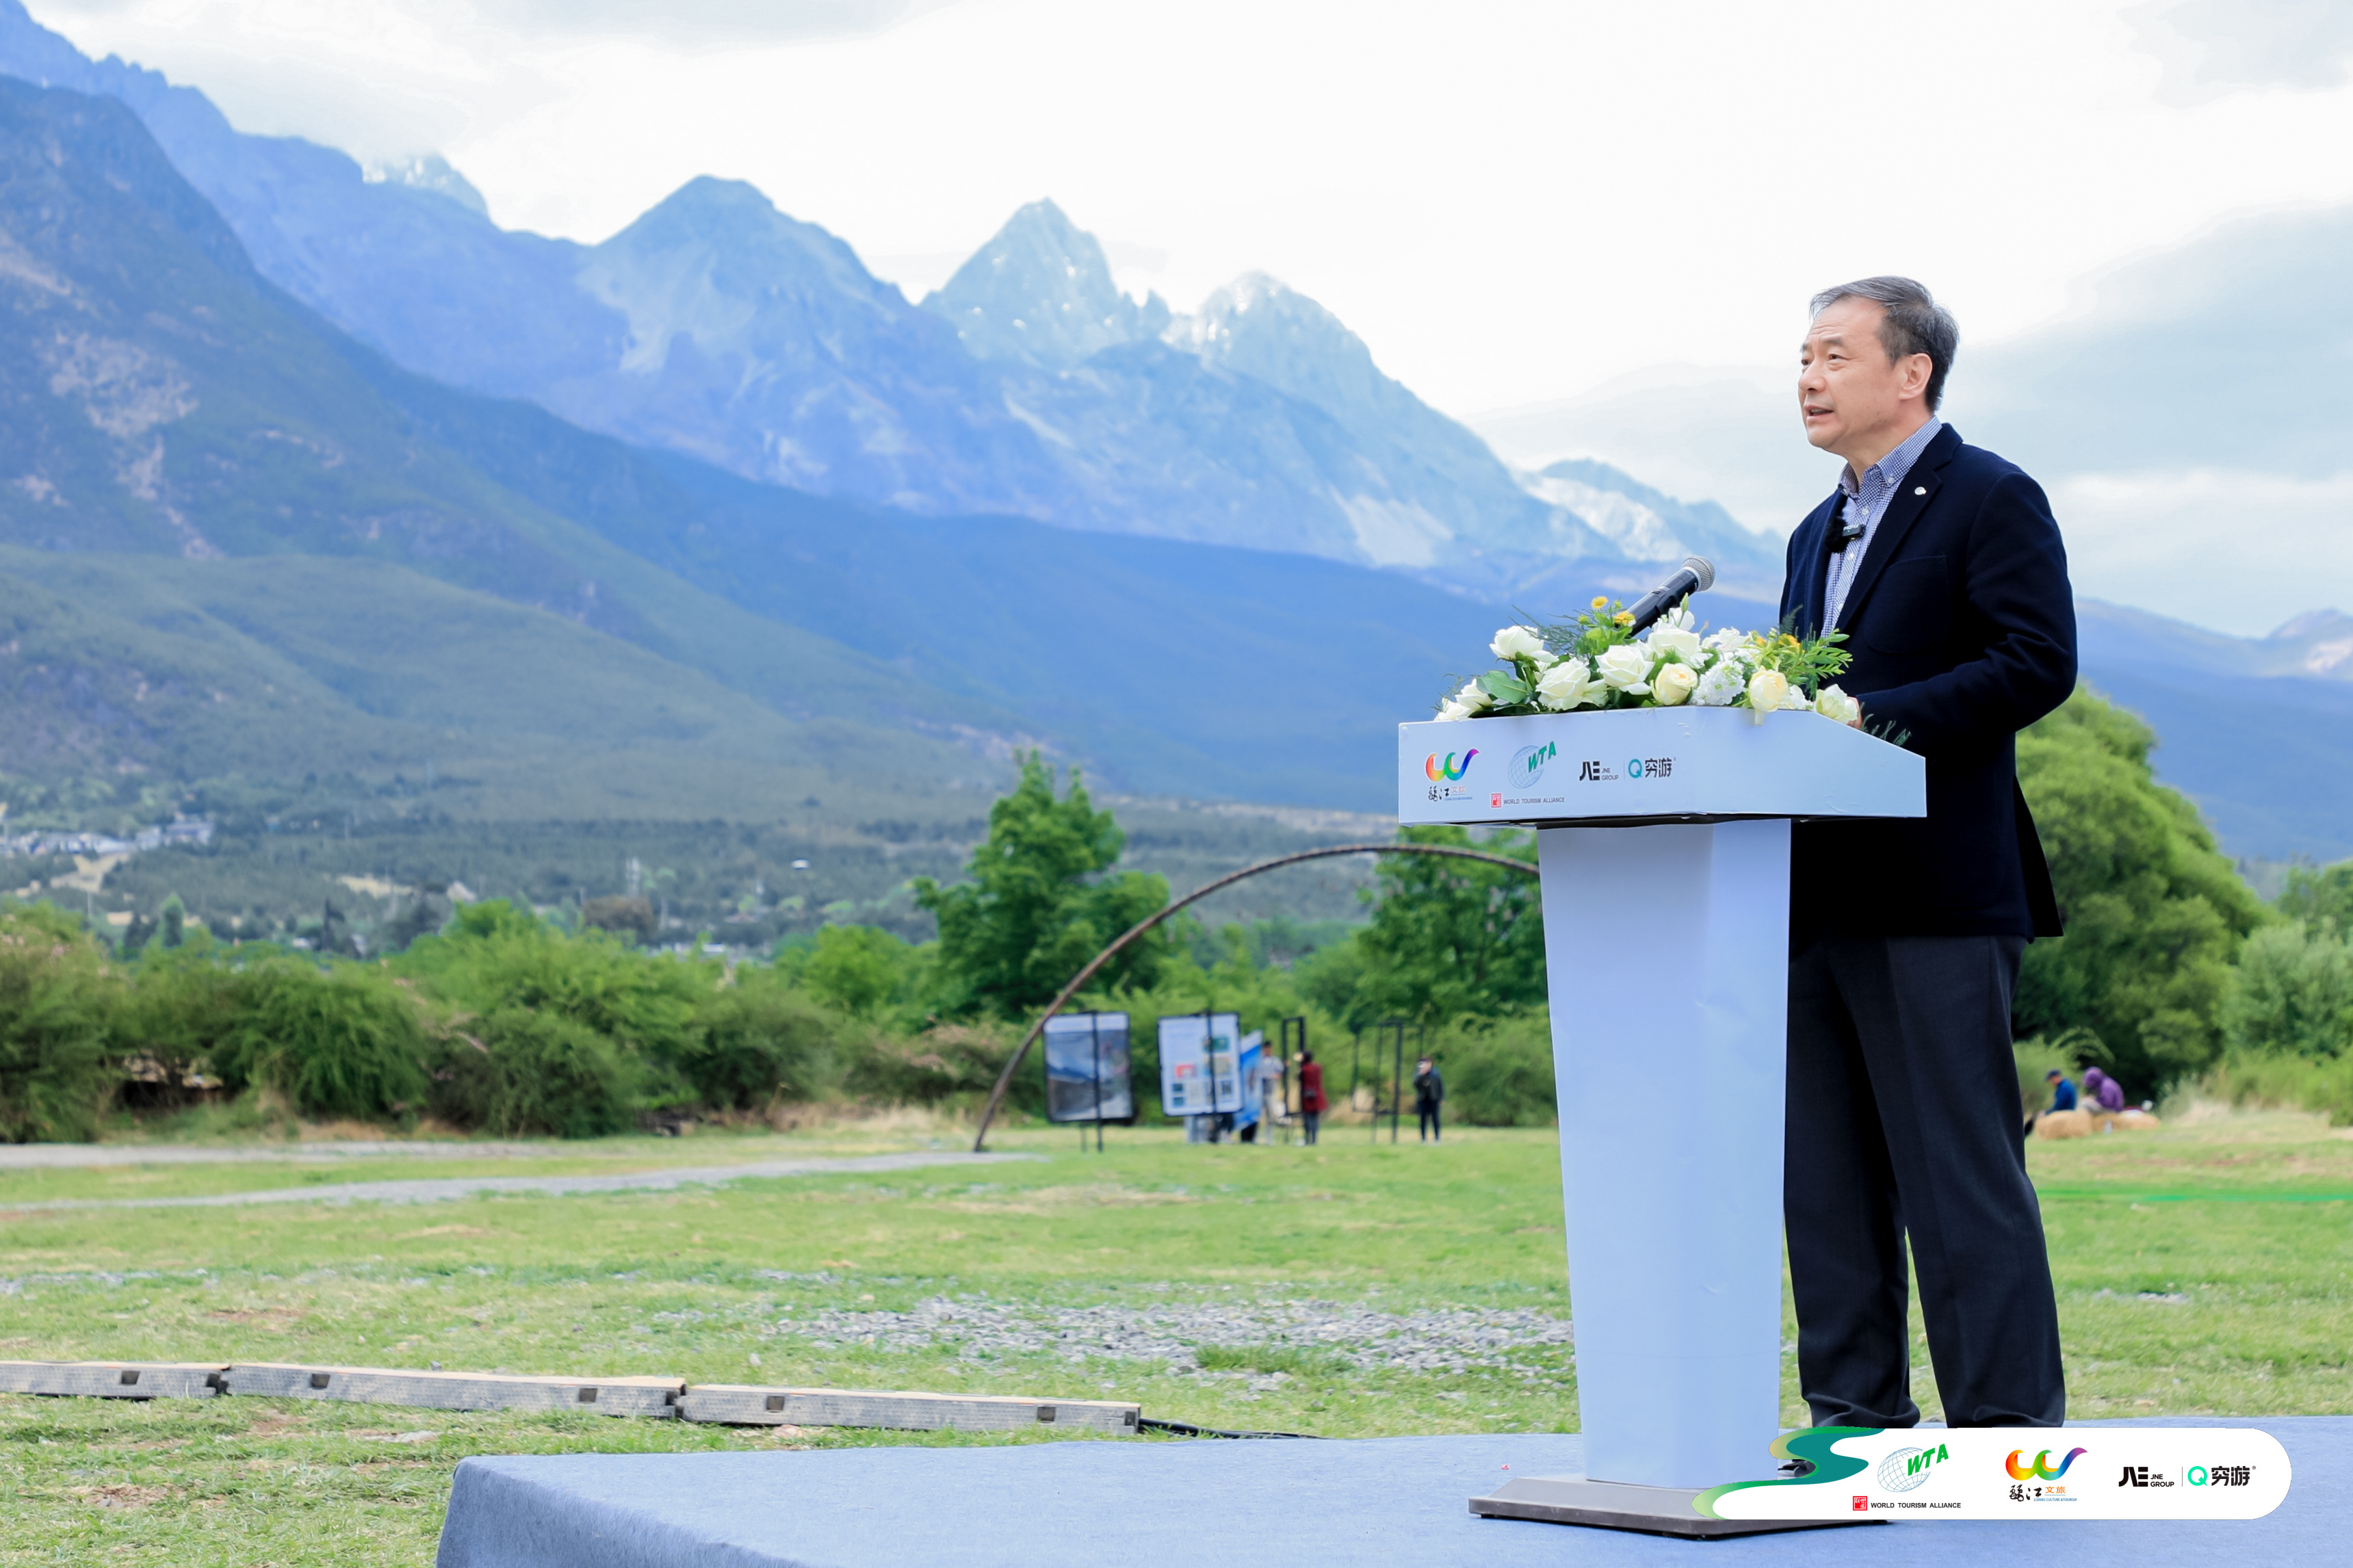 Liu Shijun, Vice Chairman and Secretary-General of the World Tourism Alliance